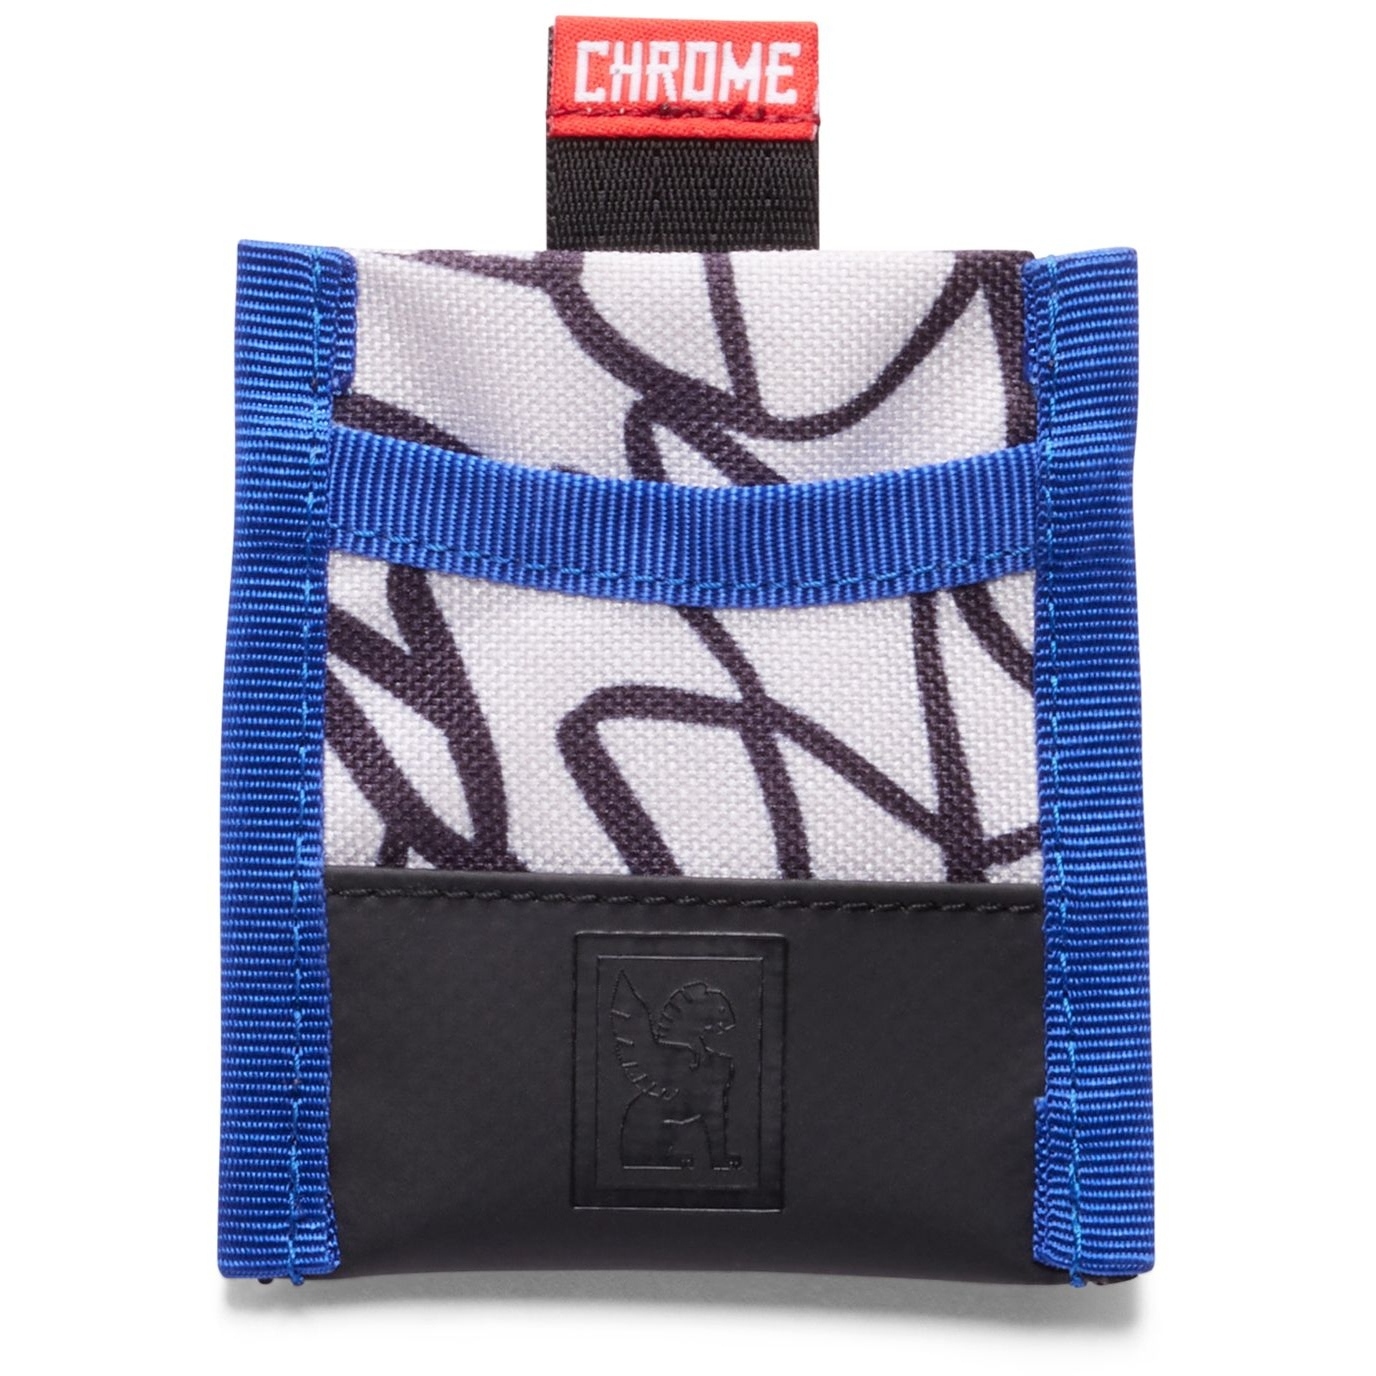 Produktbild von CHROME Cheapskate Card Wallet Portemonnaie - Lucas Beaufort